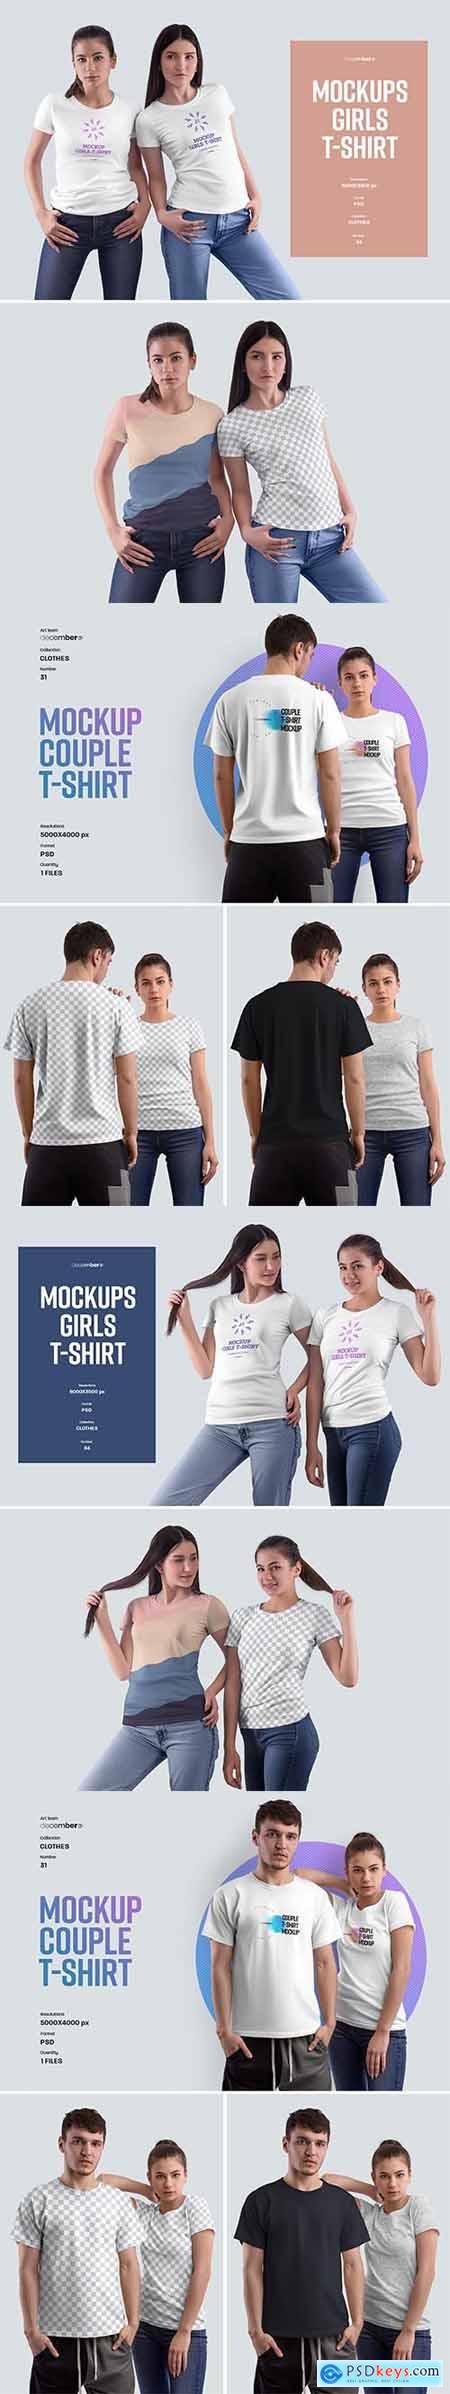 Mockup couple t-shirt